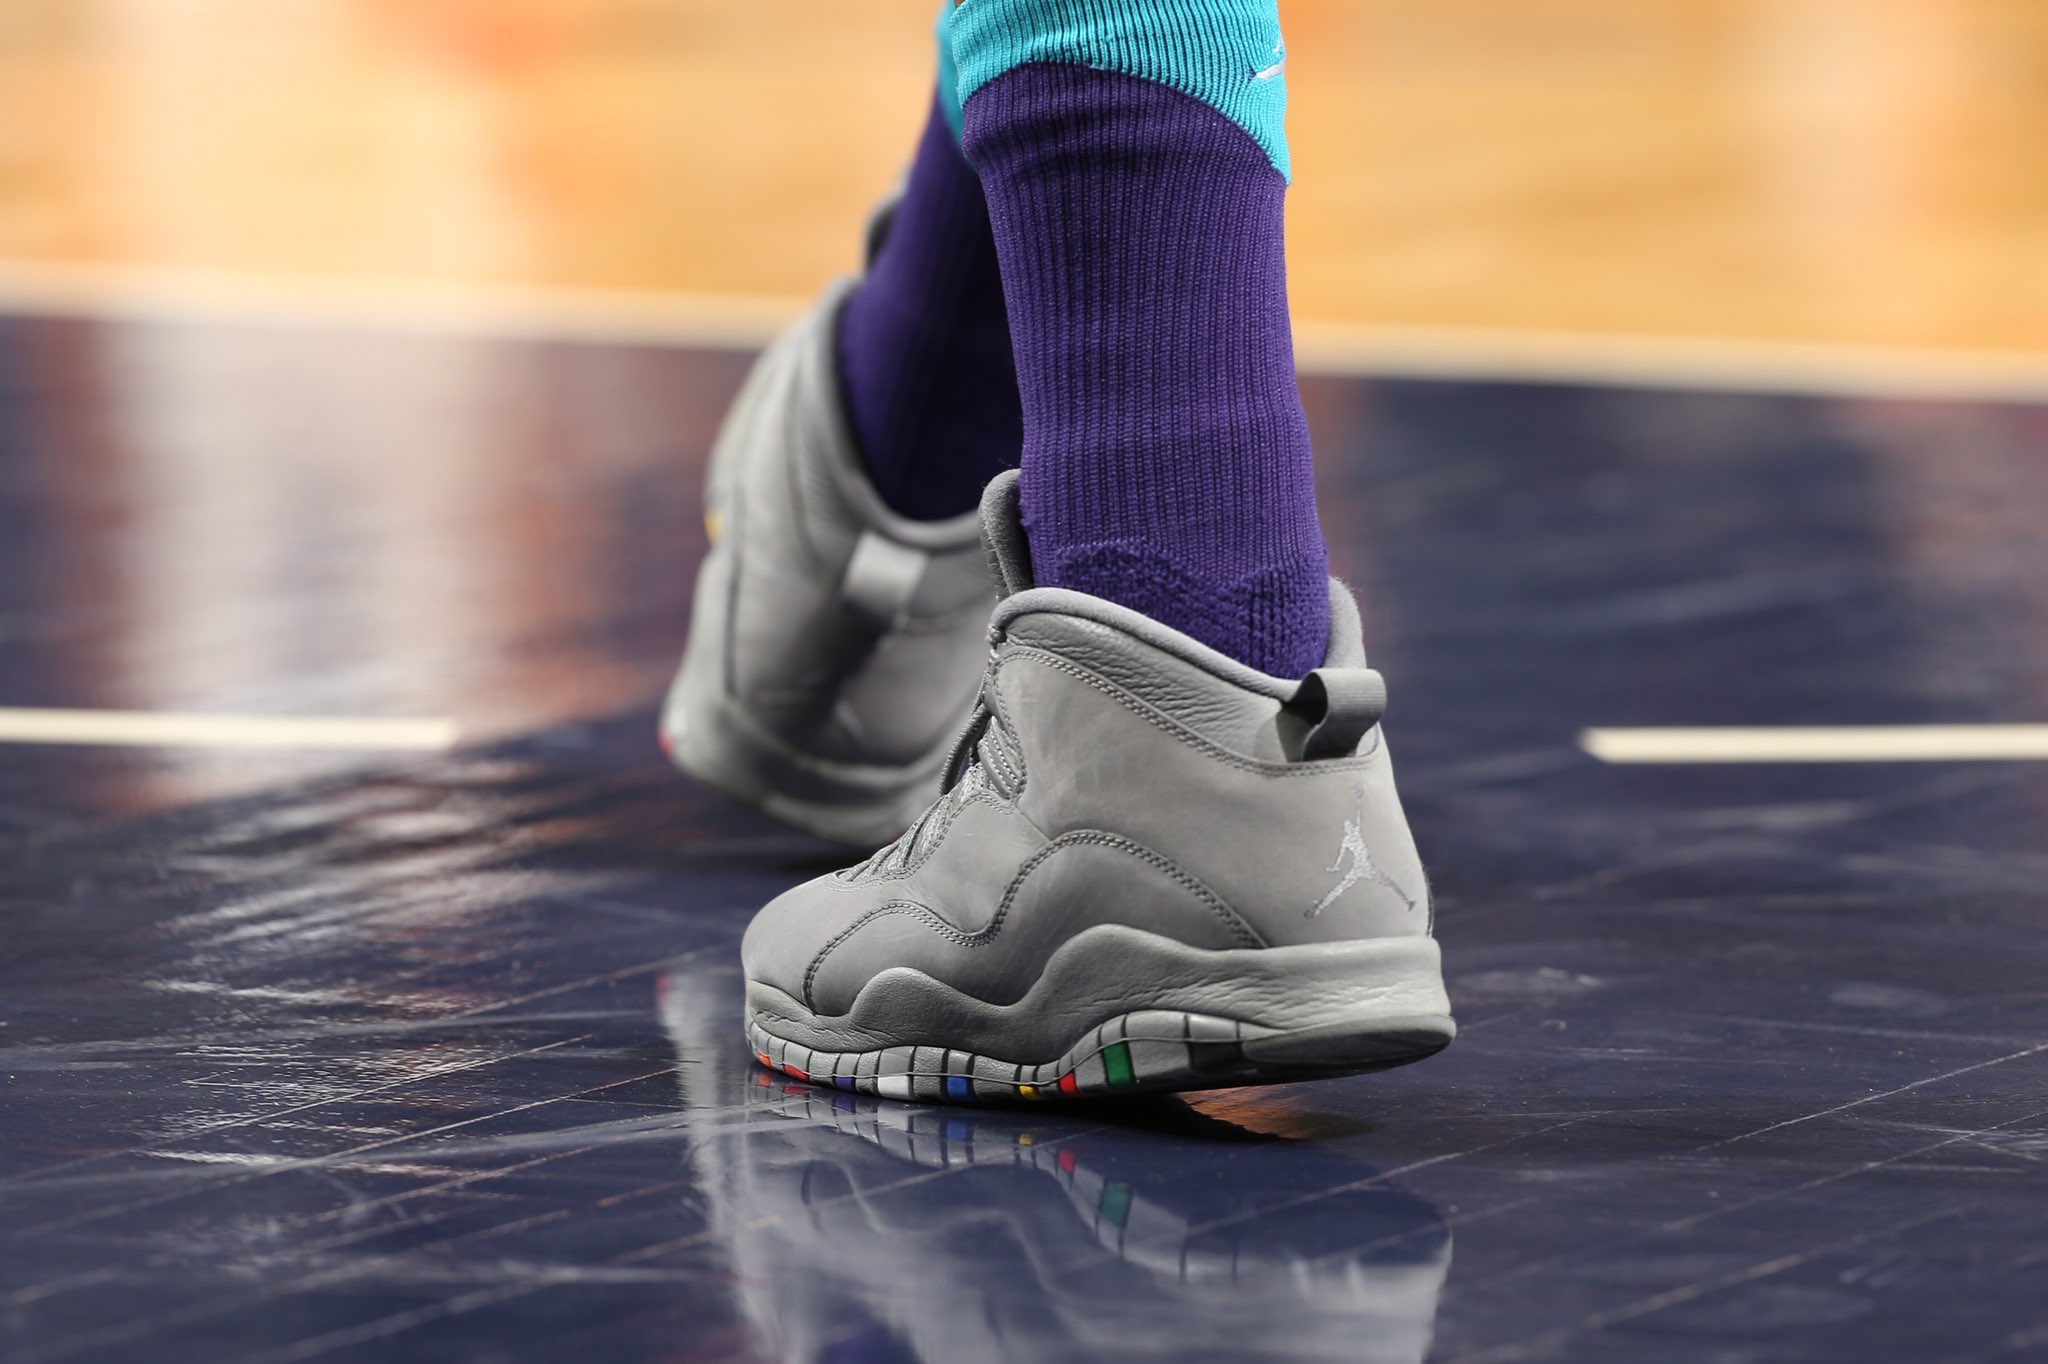 B/R Kicks on X: Air Jordan 10 “Cool Grey” @KembaWalker #BuzzCity